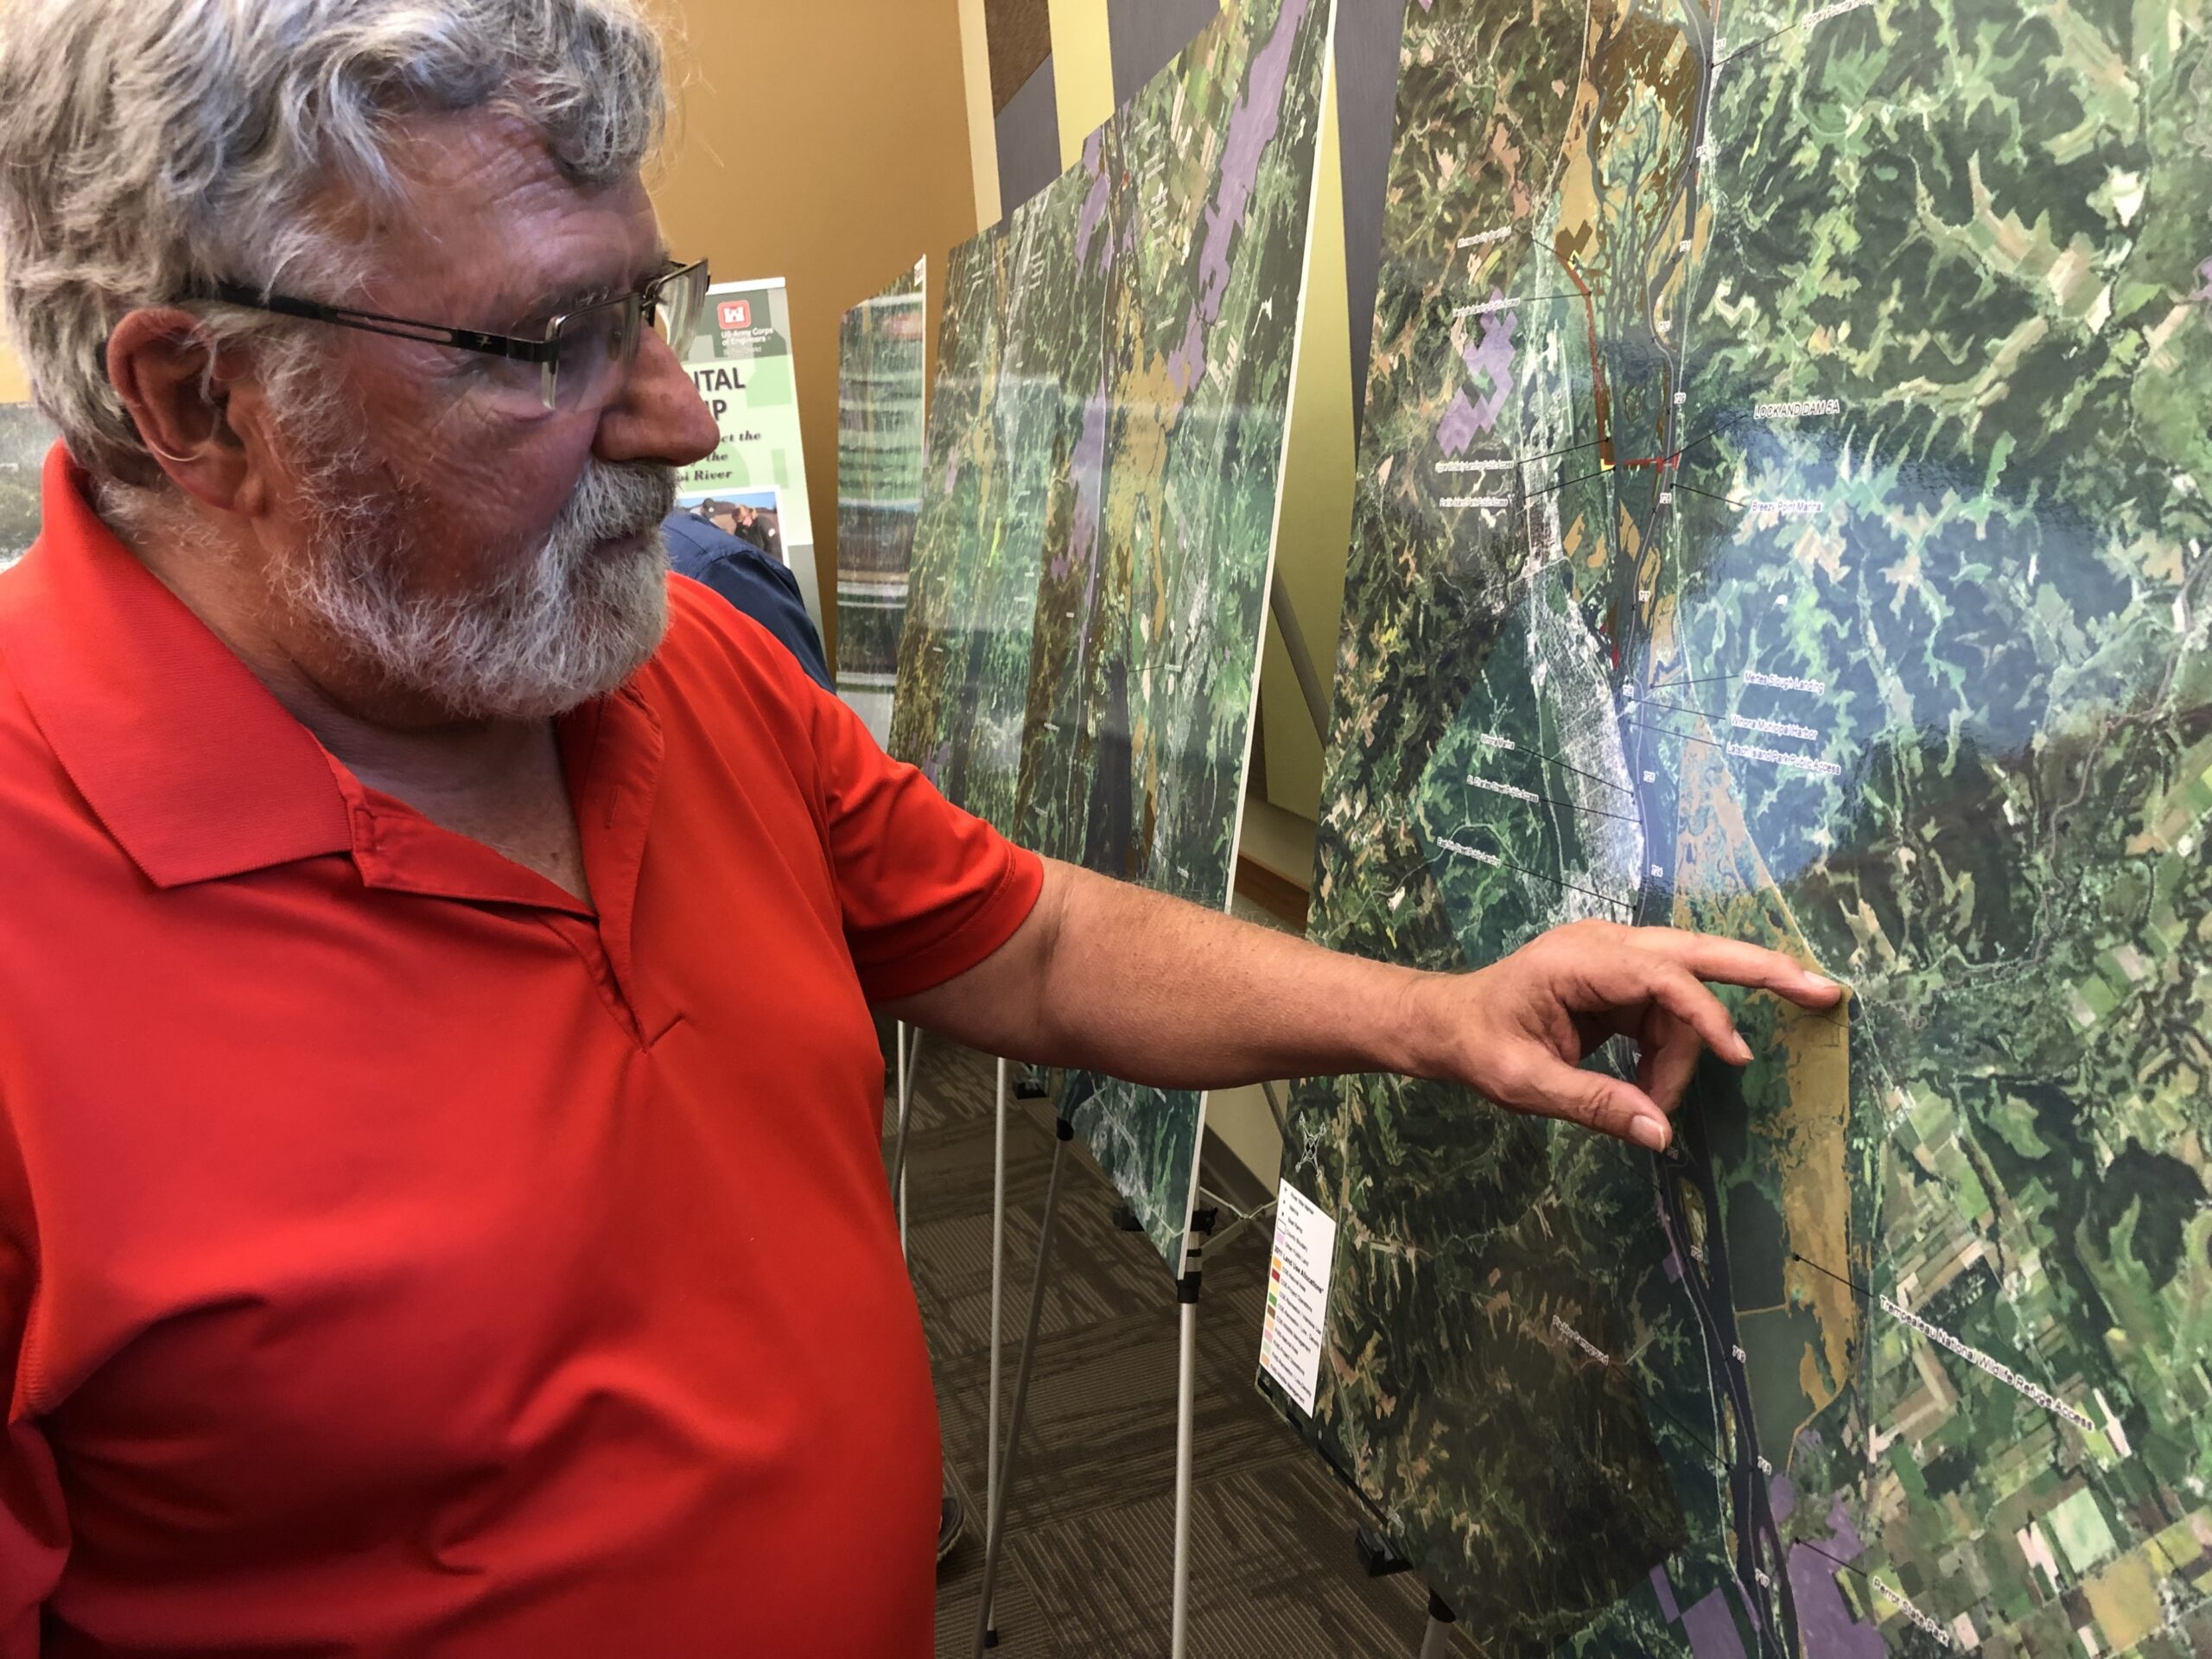 David Danzinger points to Mississippi river map